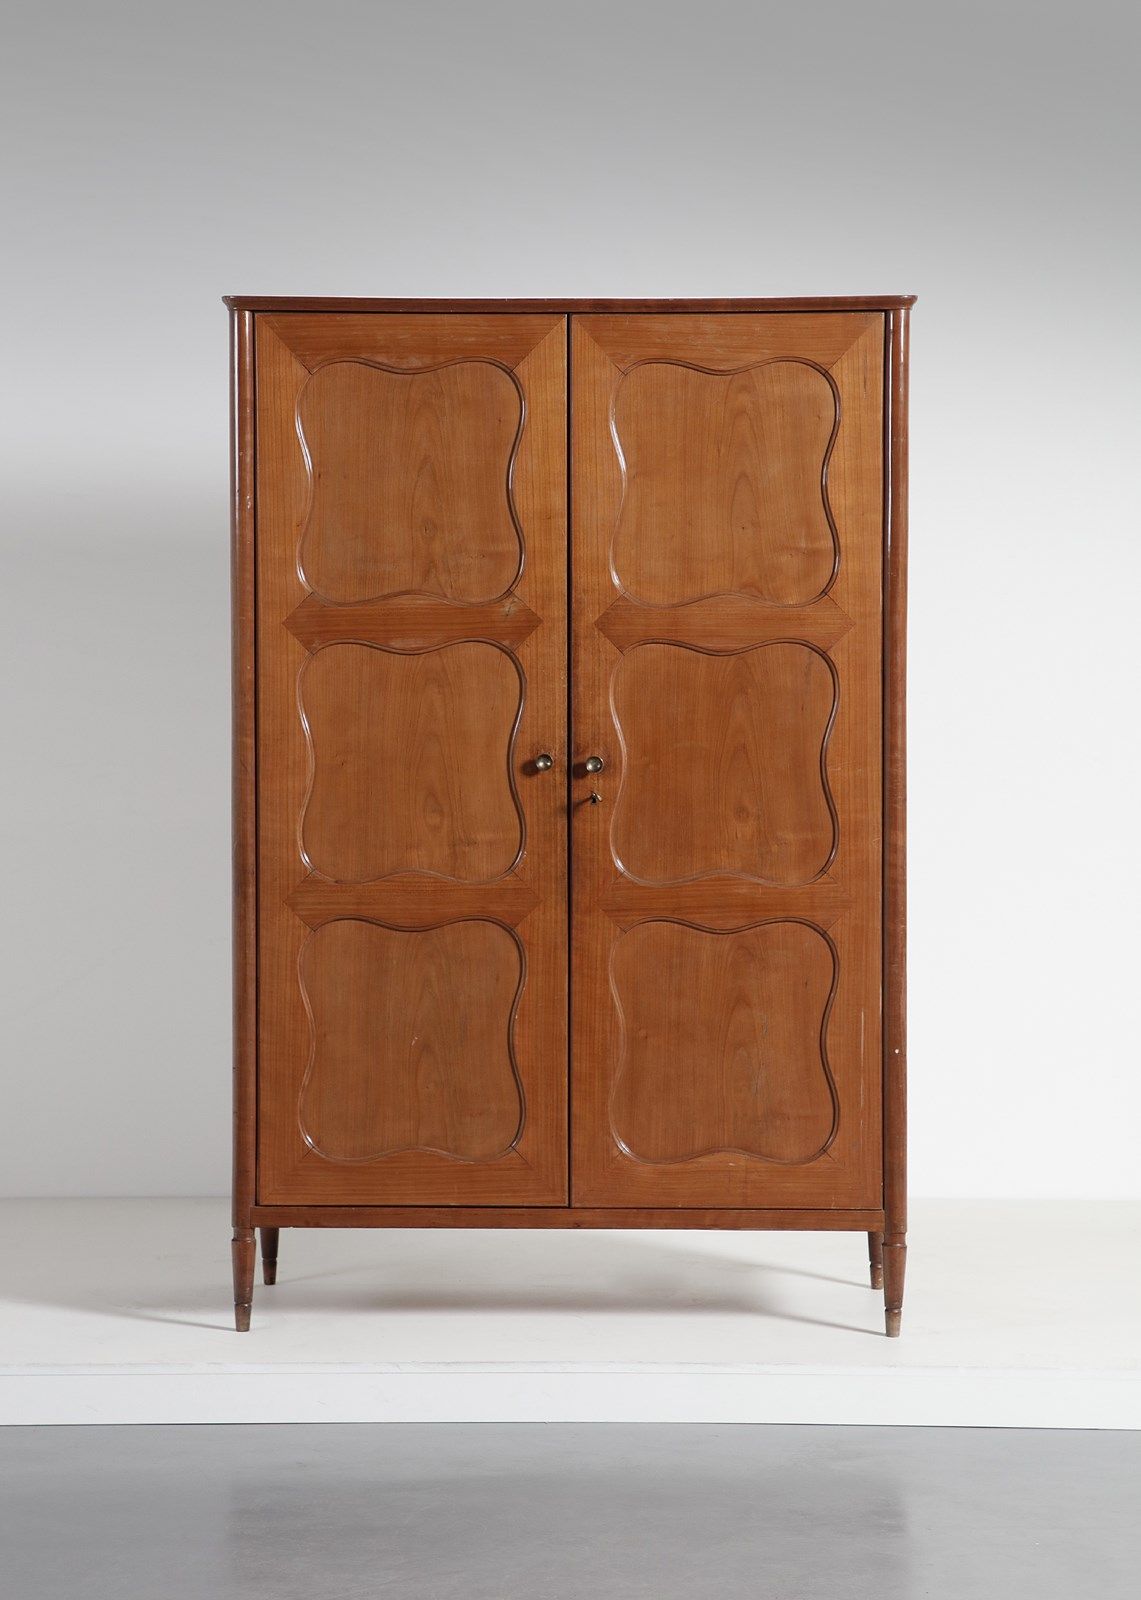 BUFFA PAOLO (1903 - 1970) PAOLO衣柜 .樱桃木和黄铜。Cm 120,00 x 179,00 x 59,00. 30年代。